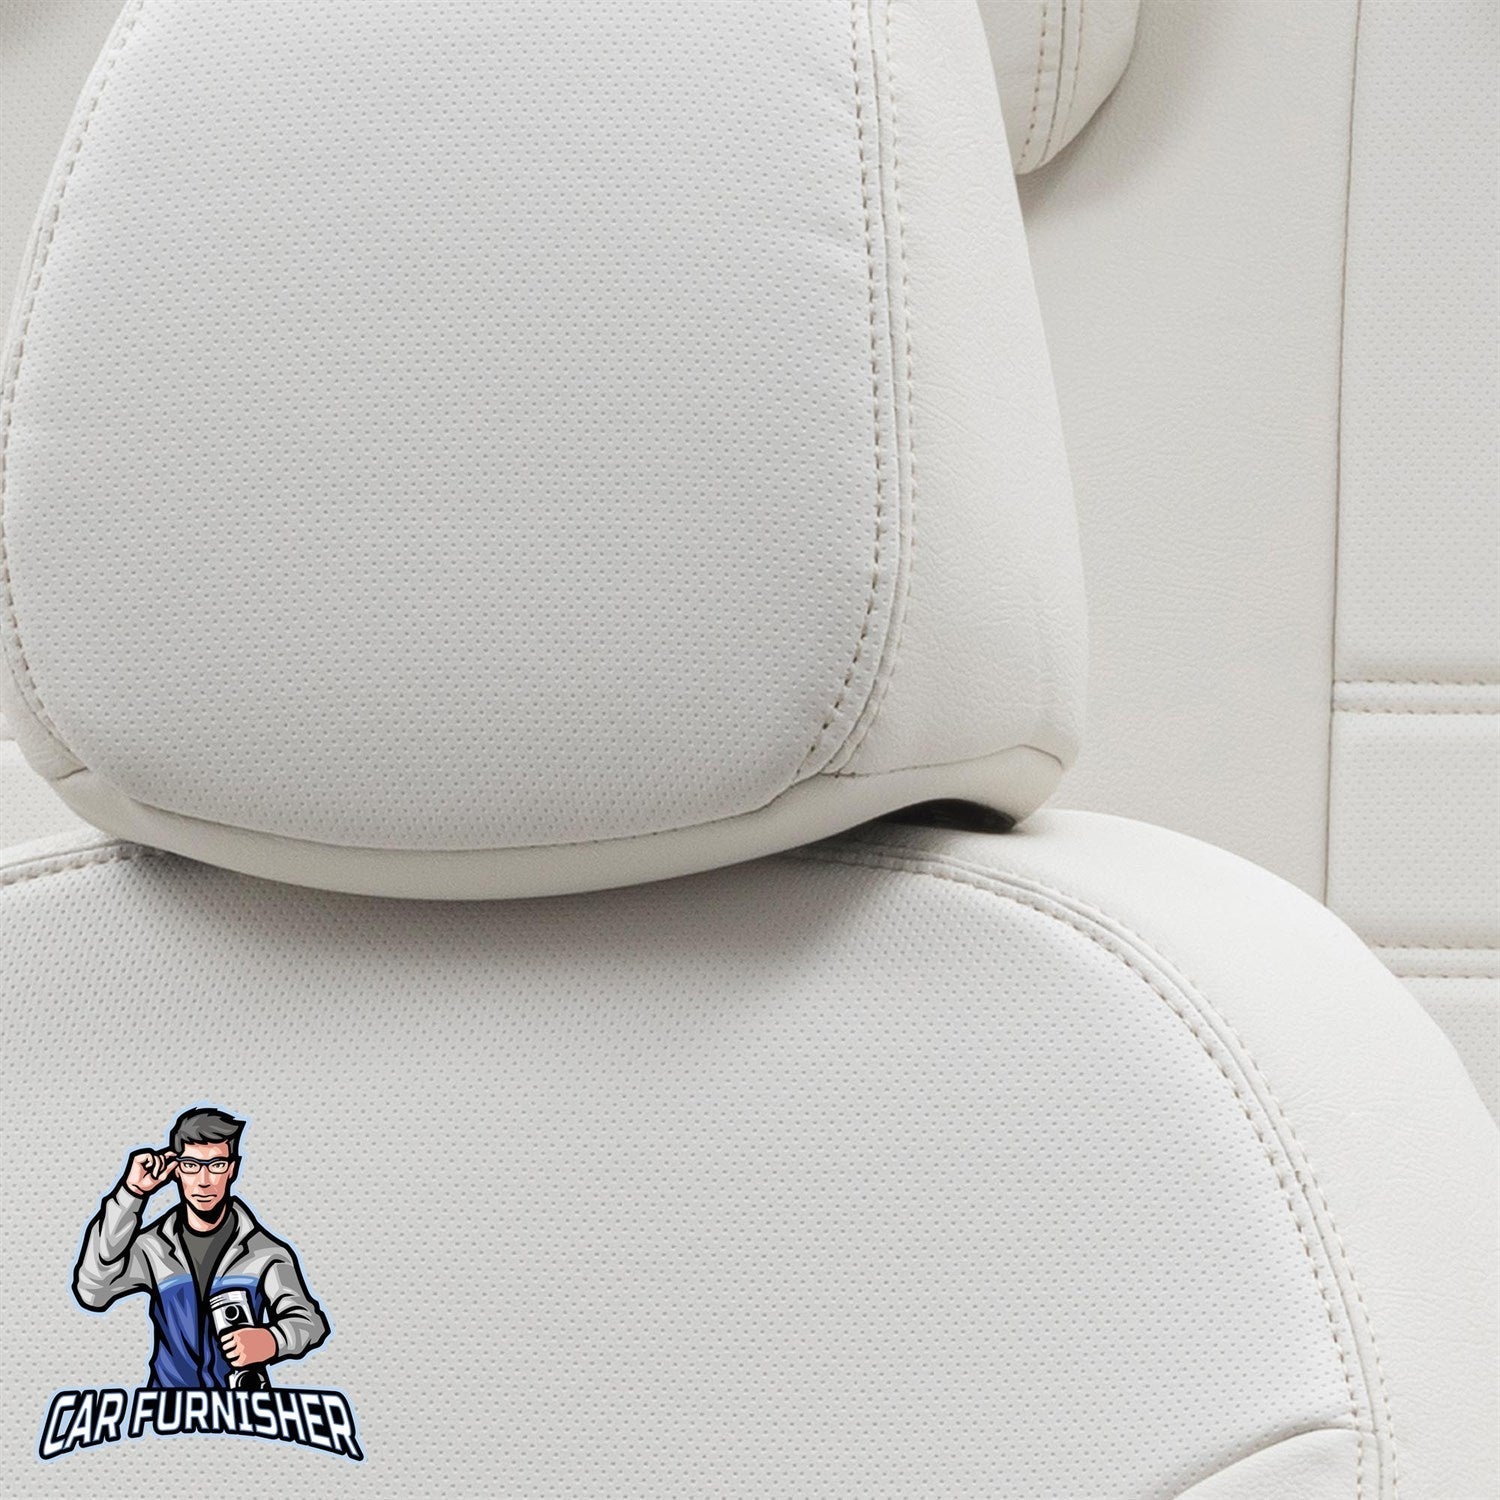 Hyundai Kona Seat Covers Istanbul Leather Design Ivory Leather